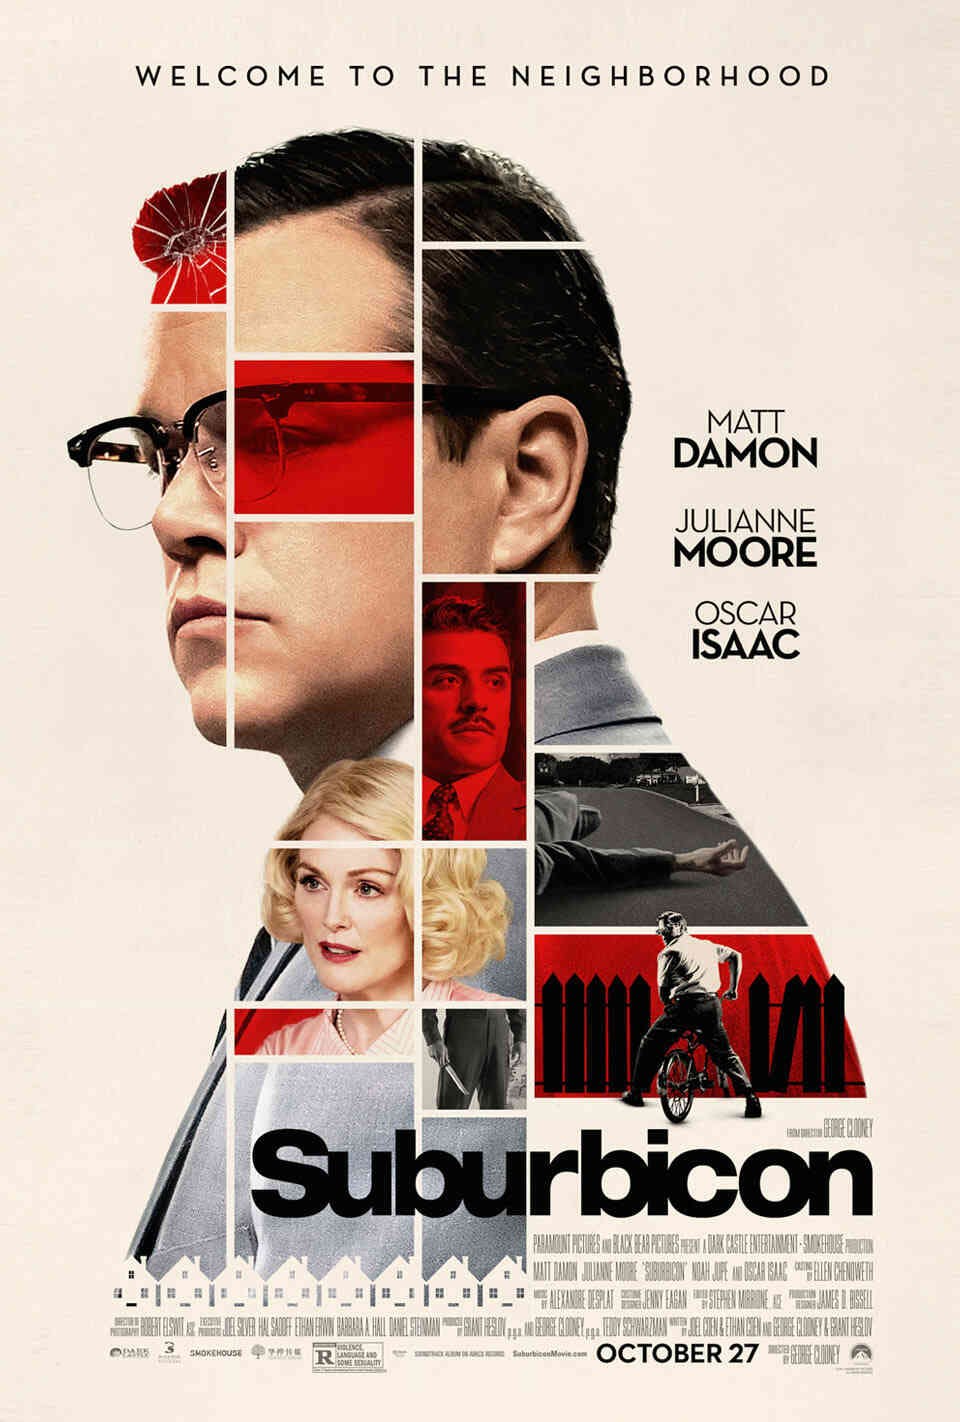 Read Suburbicon screenplay.